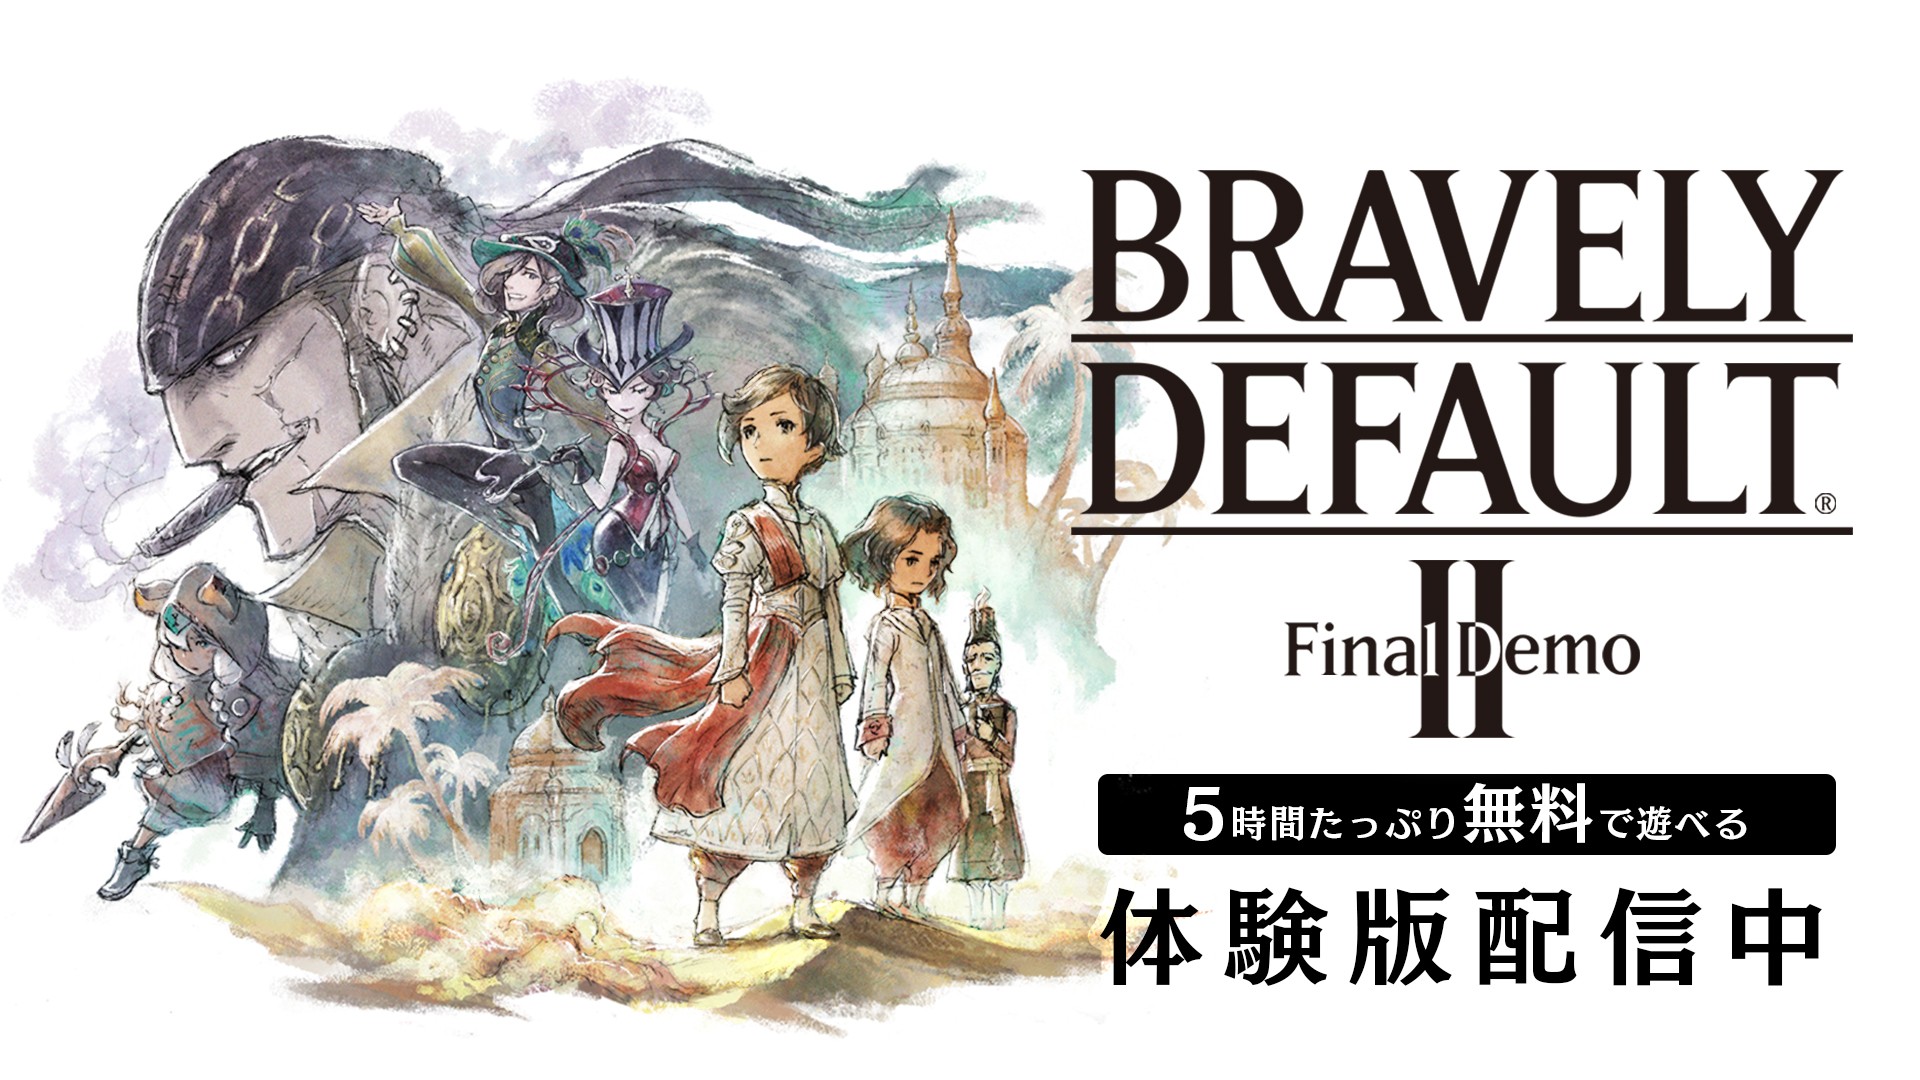 《Bravely Default II》今日正式發售 回顧世界觀與主要遊戲系統